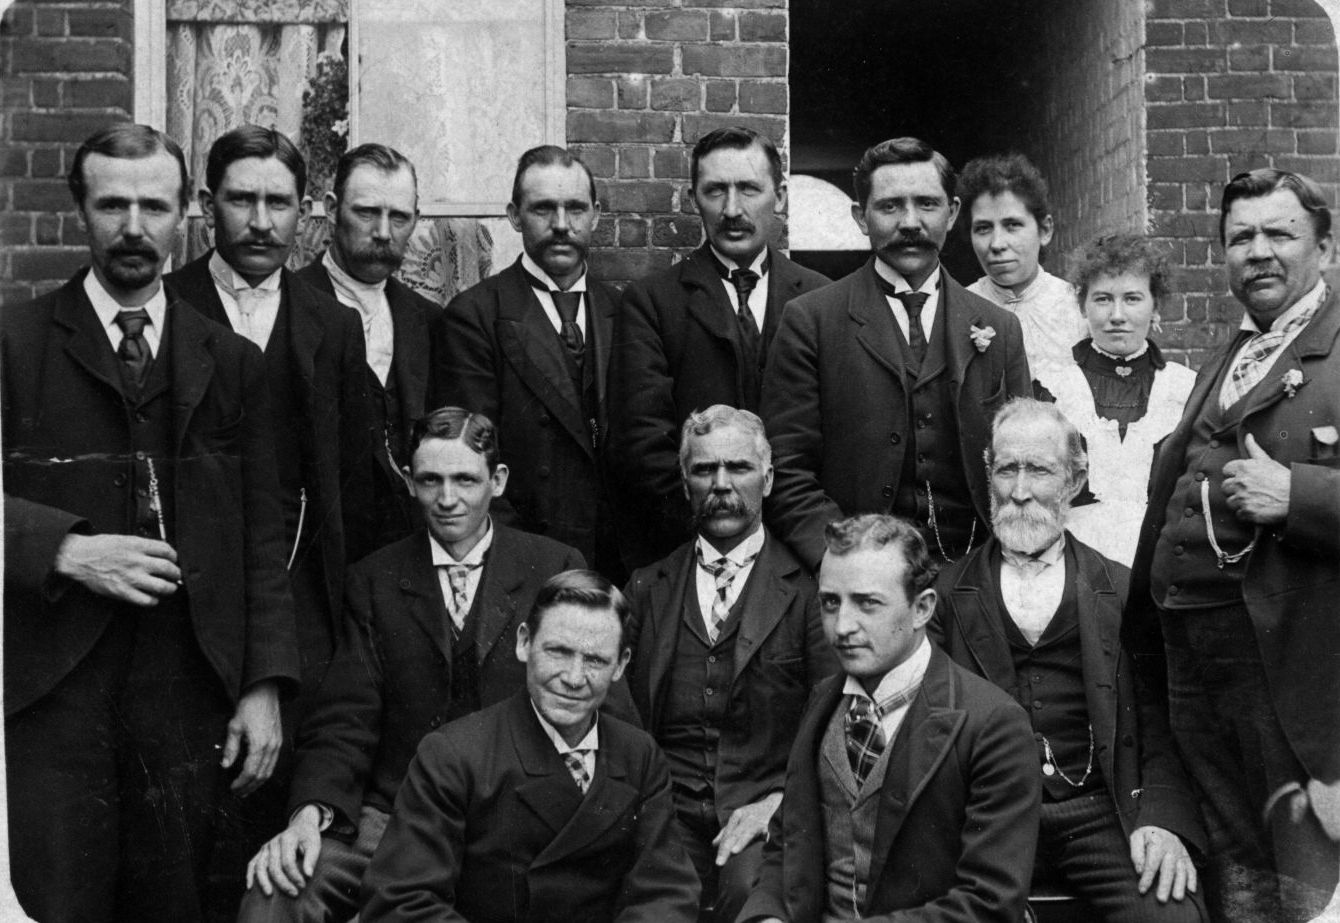 Norwich England Missionaries at Waspe Home, Circa 1898